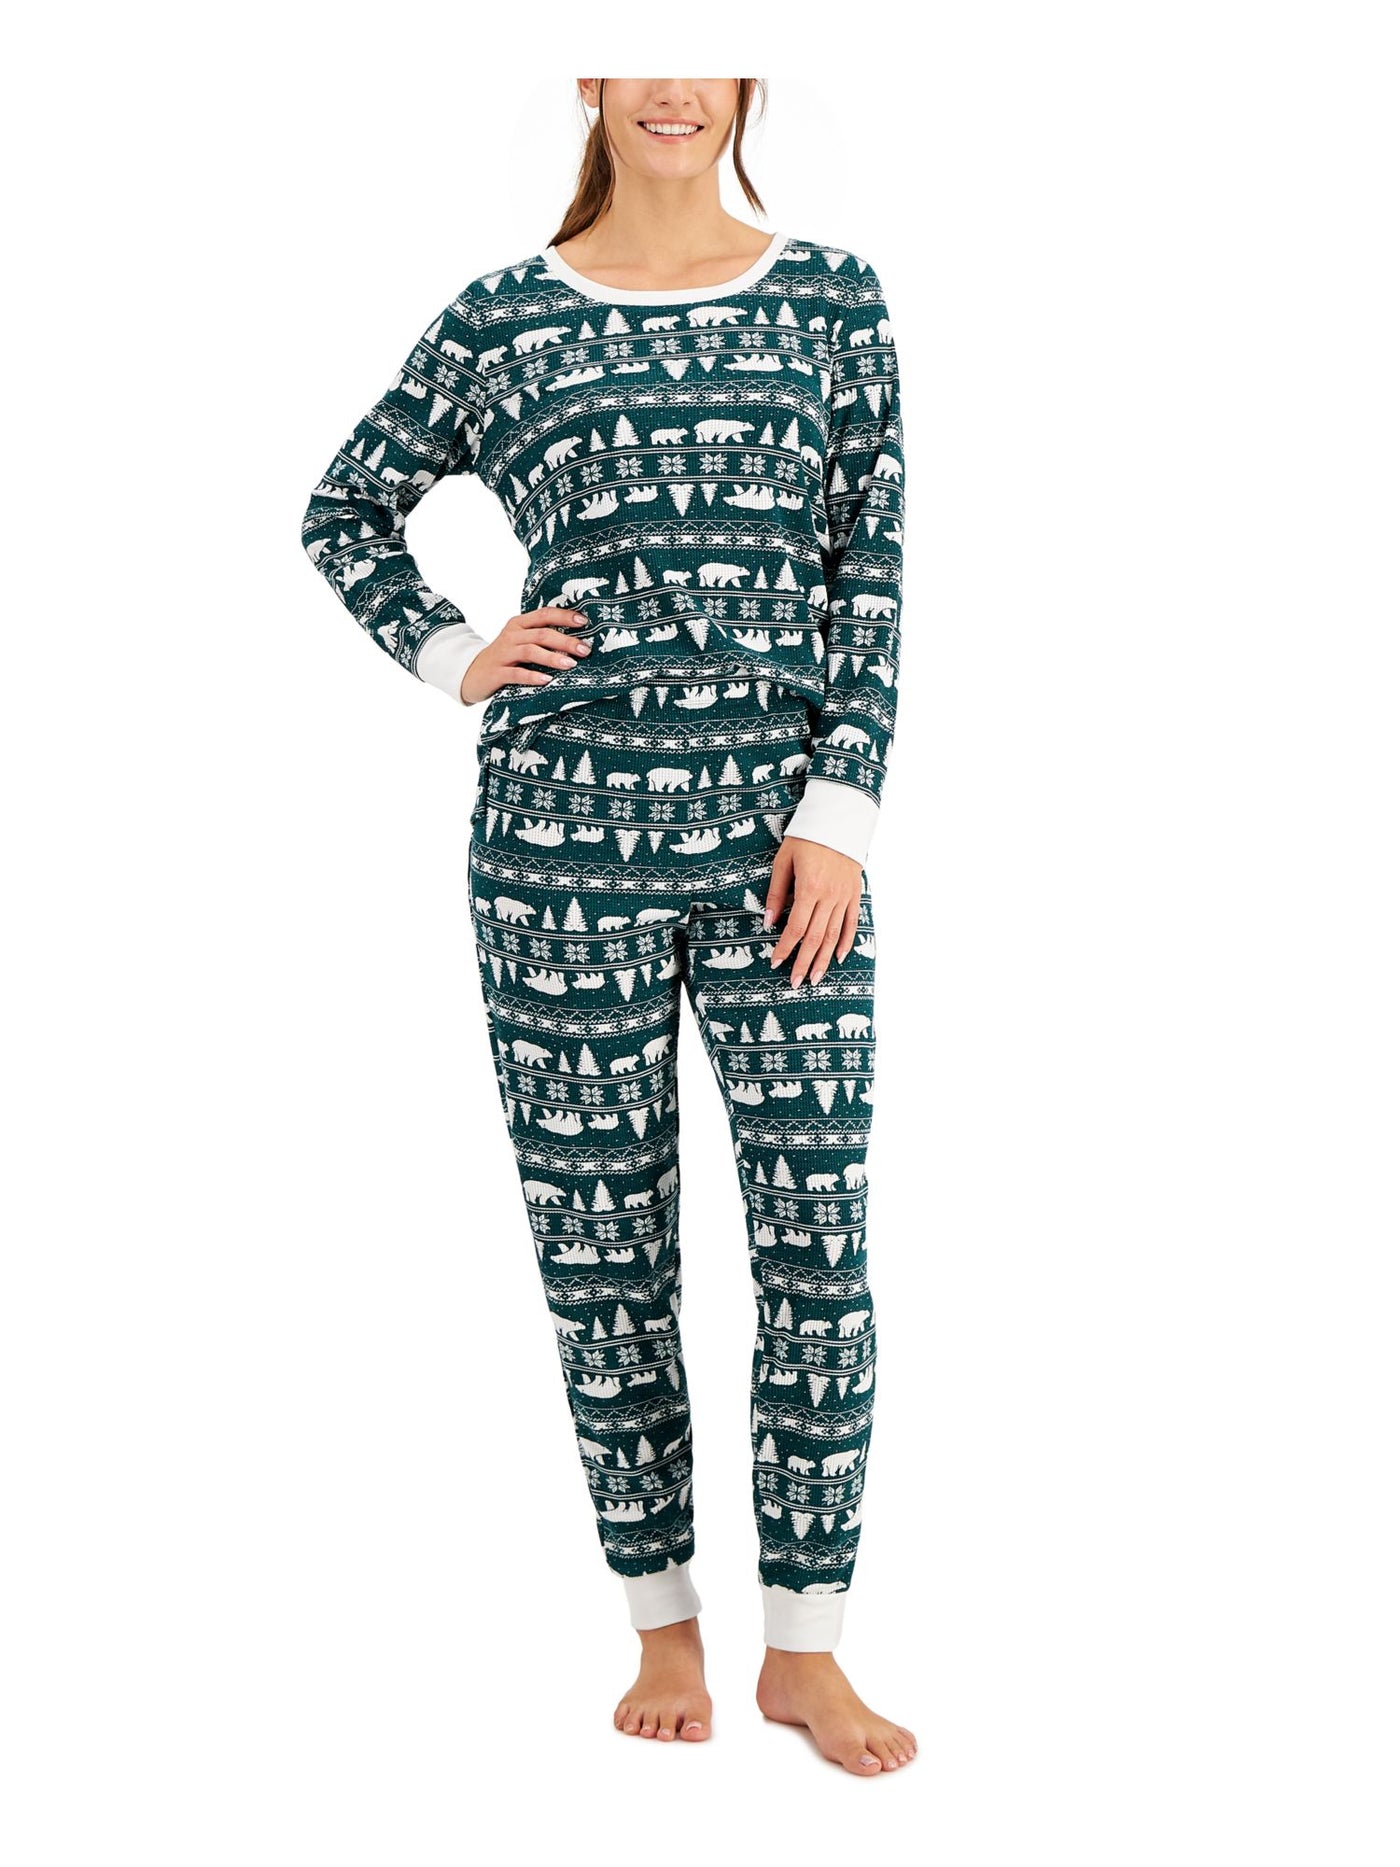 FAMILY PJs Womens Green Printed Top Elastic Band Long Sleeve Lounge Pants Pajamas XXL